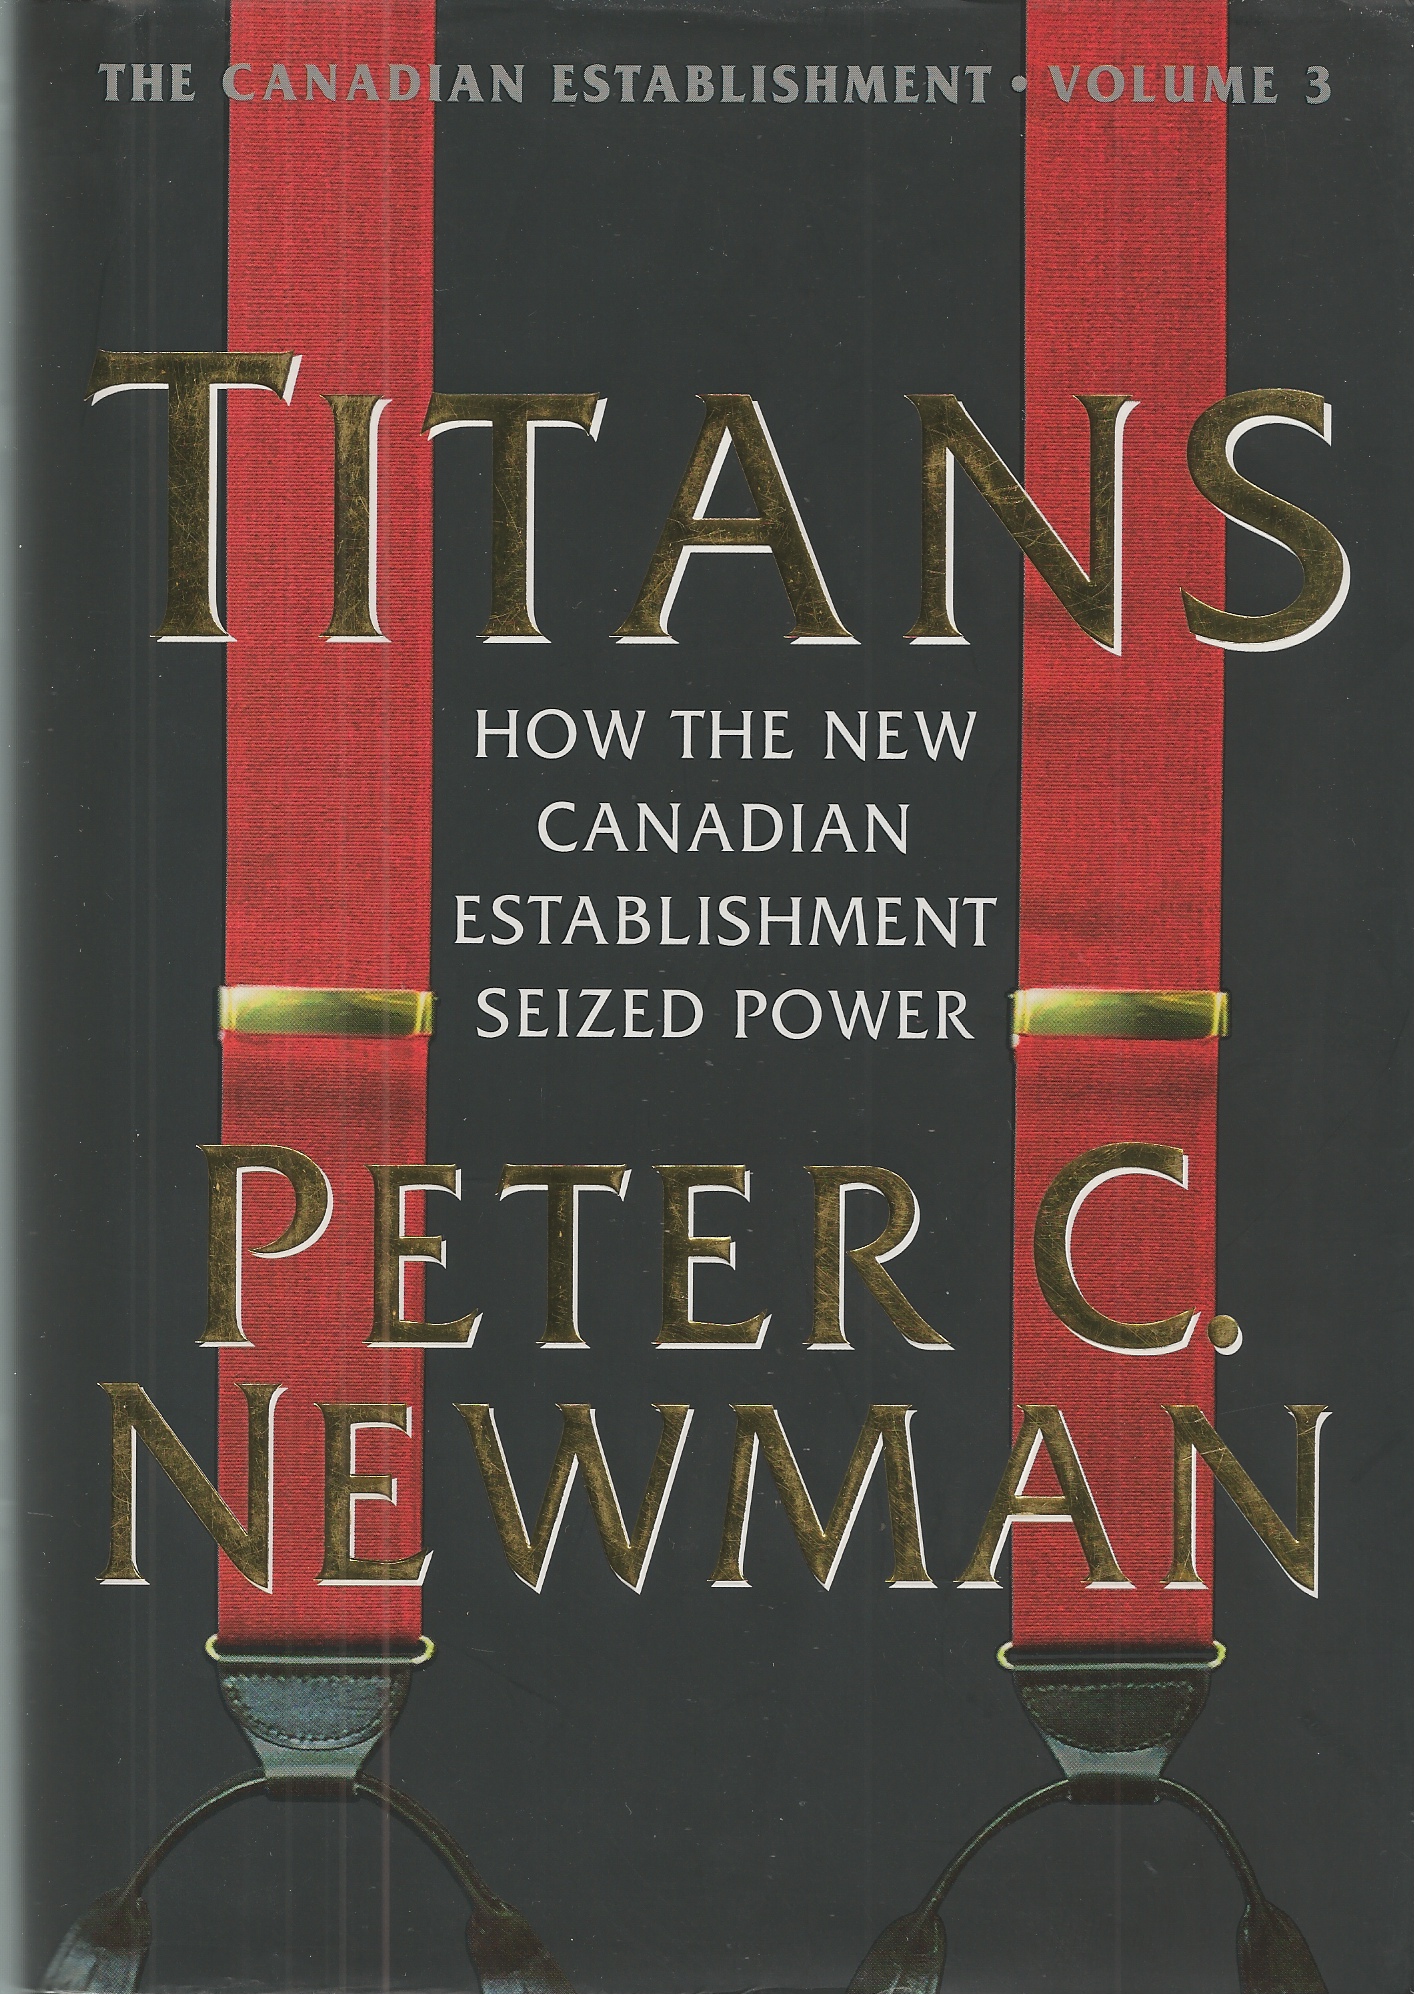 NEWMAN PETER C. - Titans: How the New Canadian Establishment Seized Power